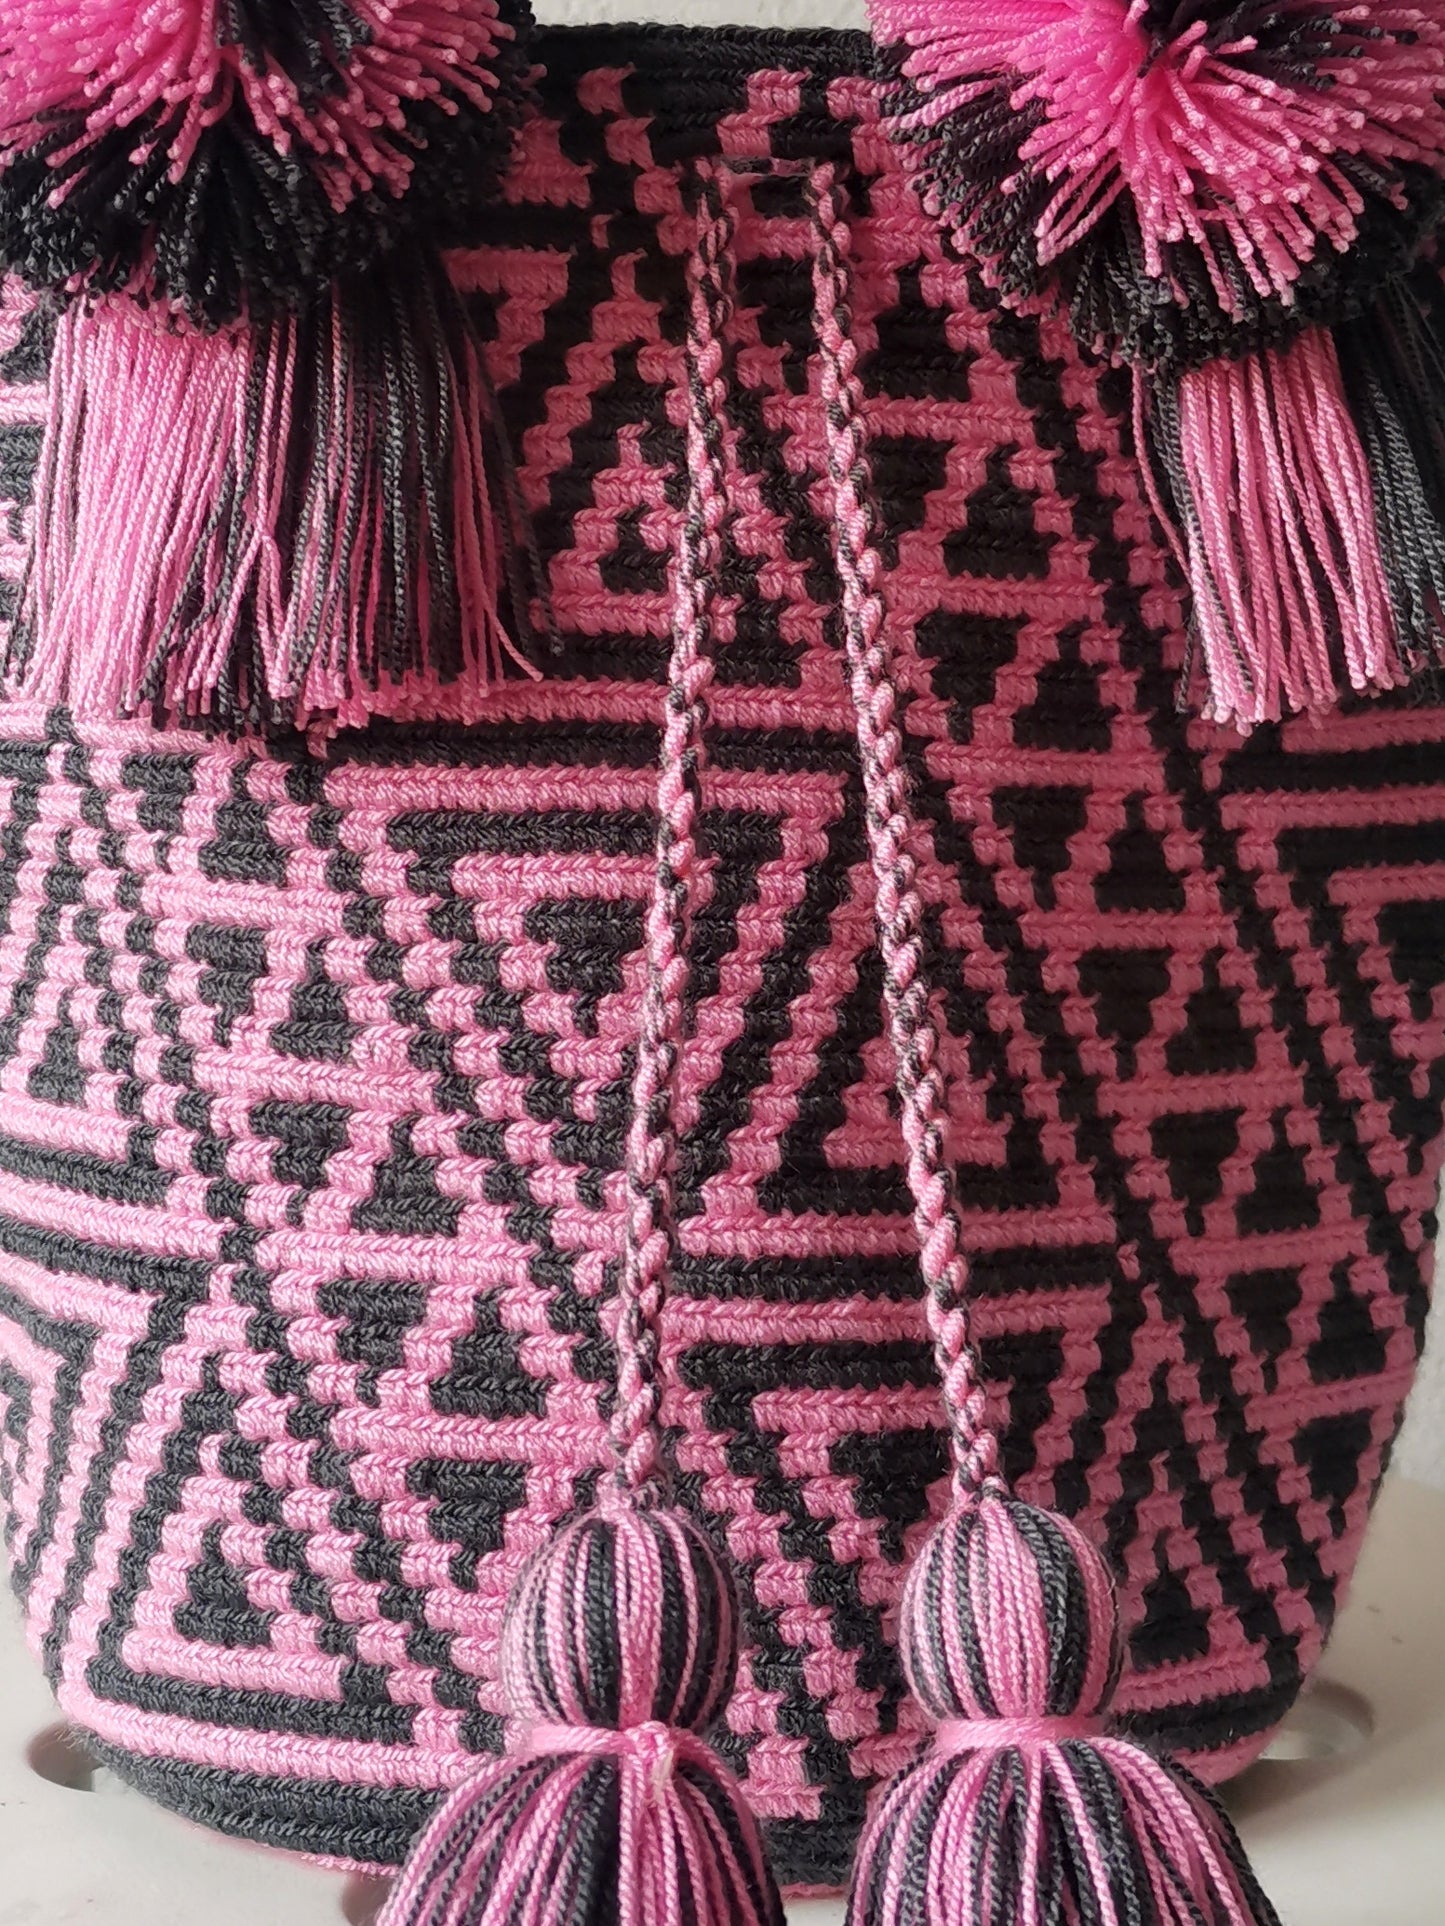 CAMPIONE - M dark gray and pink mochila handbag